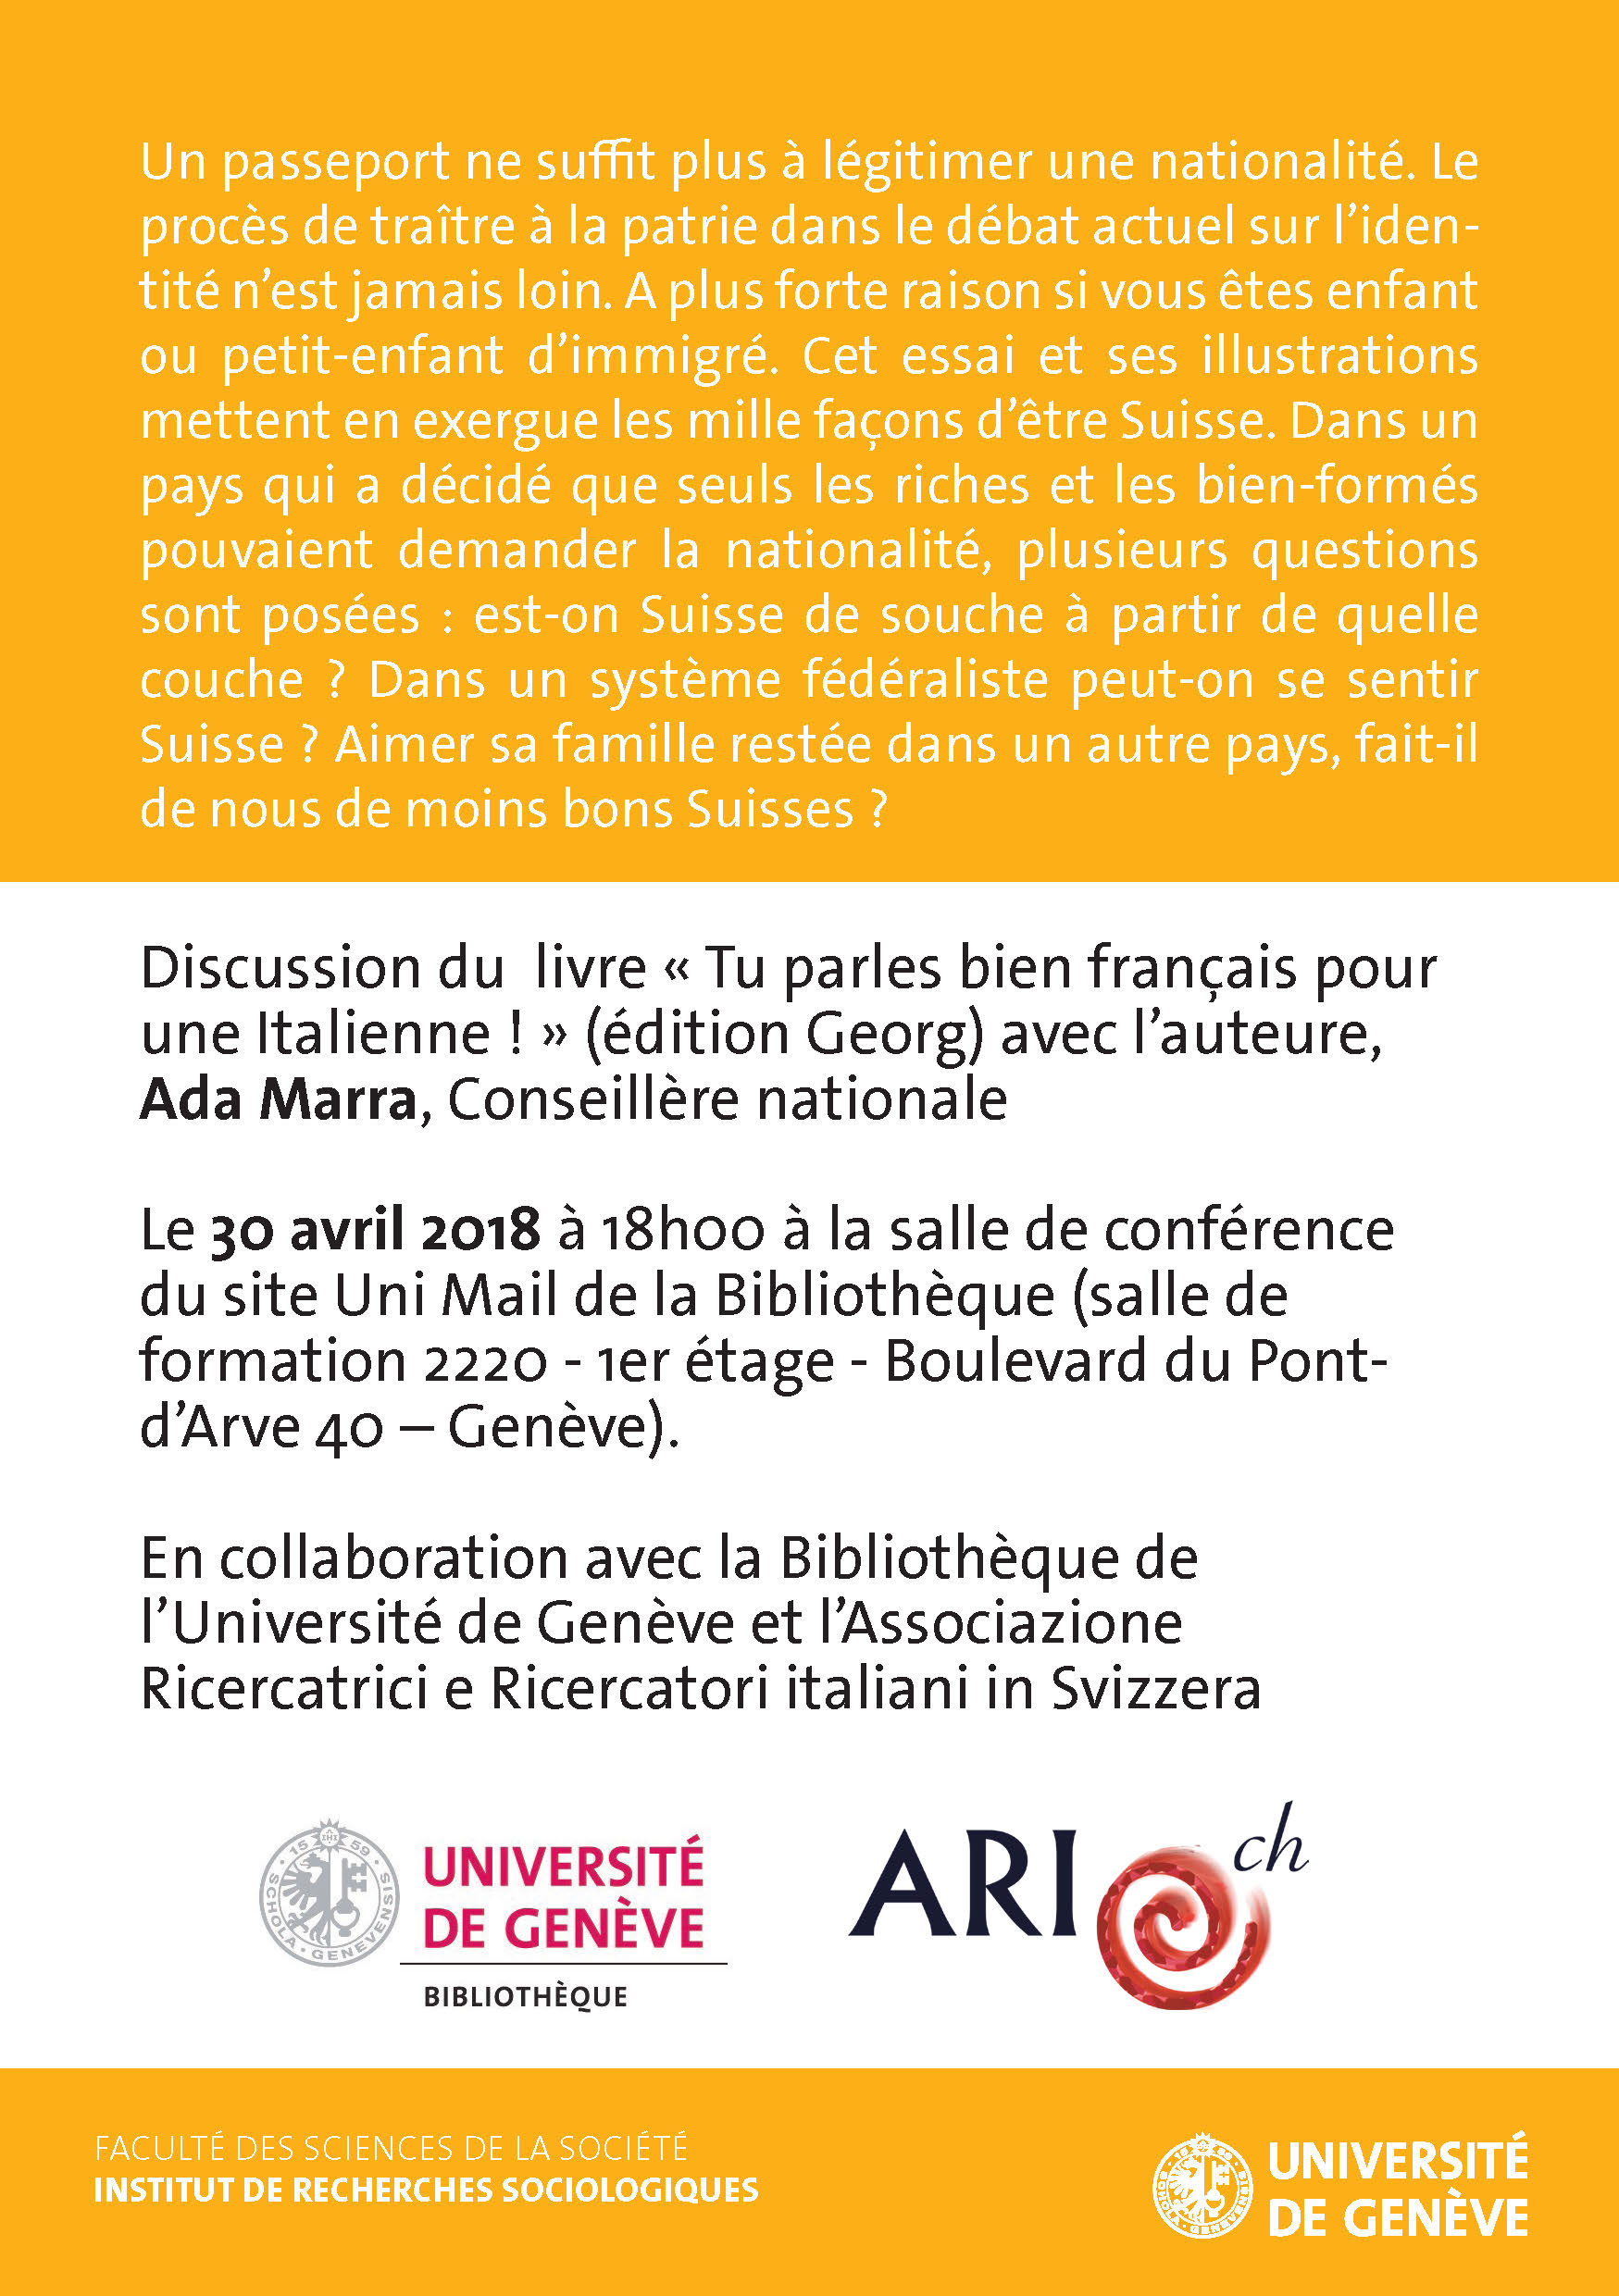 Flyer Ada Marra Bibliothèque 2018_Page_2.jpg